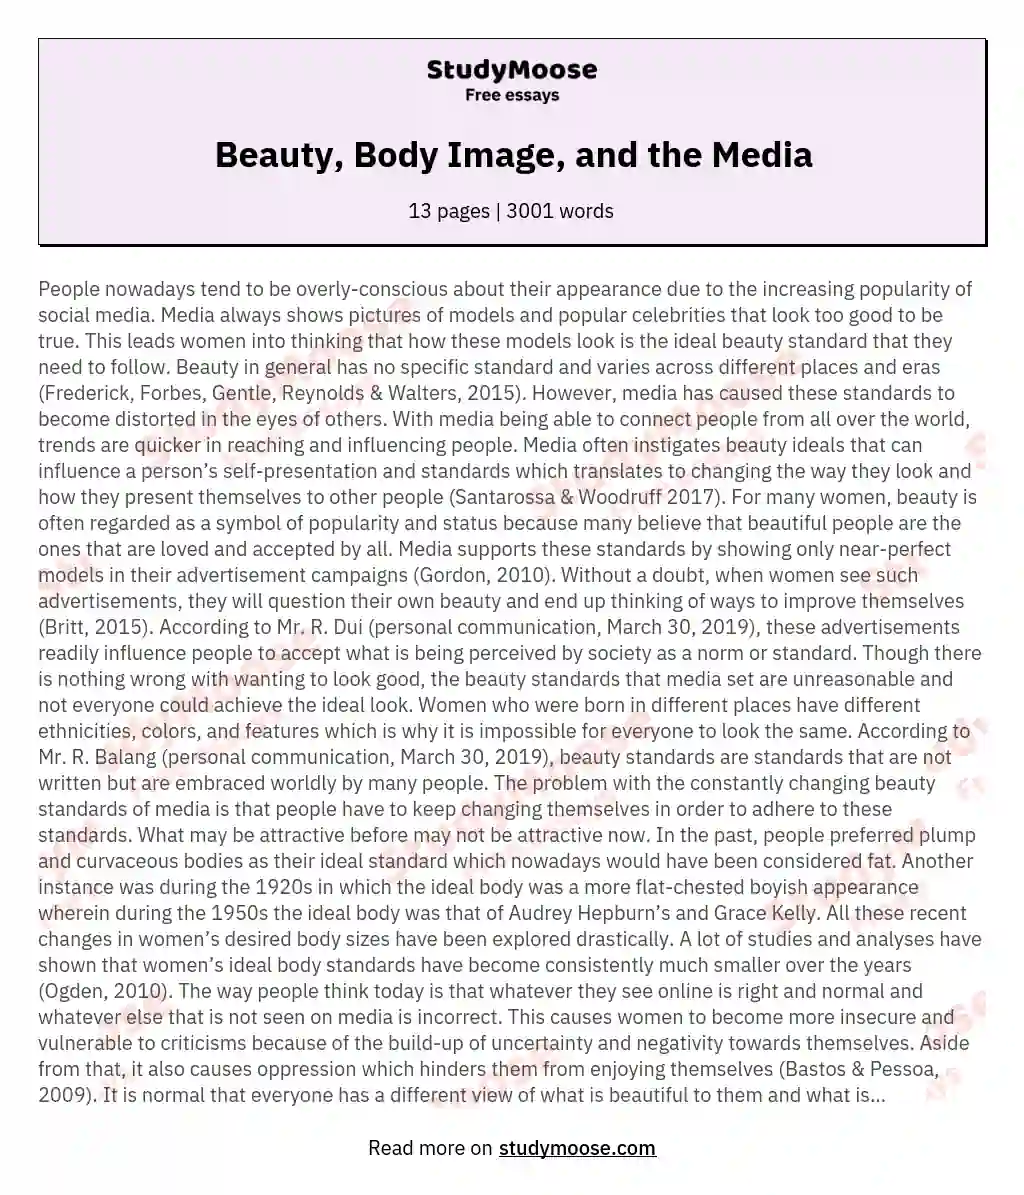 Beauty, Body Image, and the Media essay